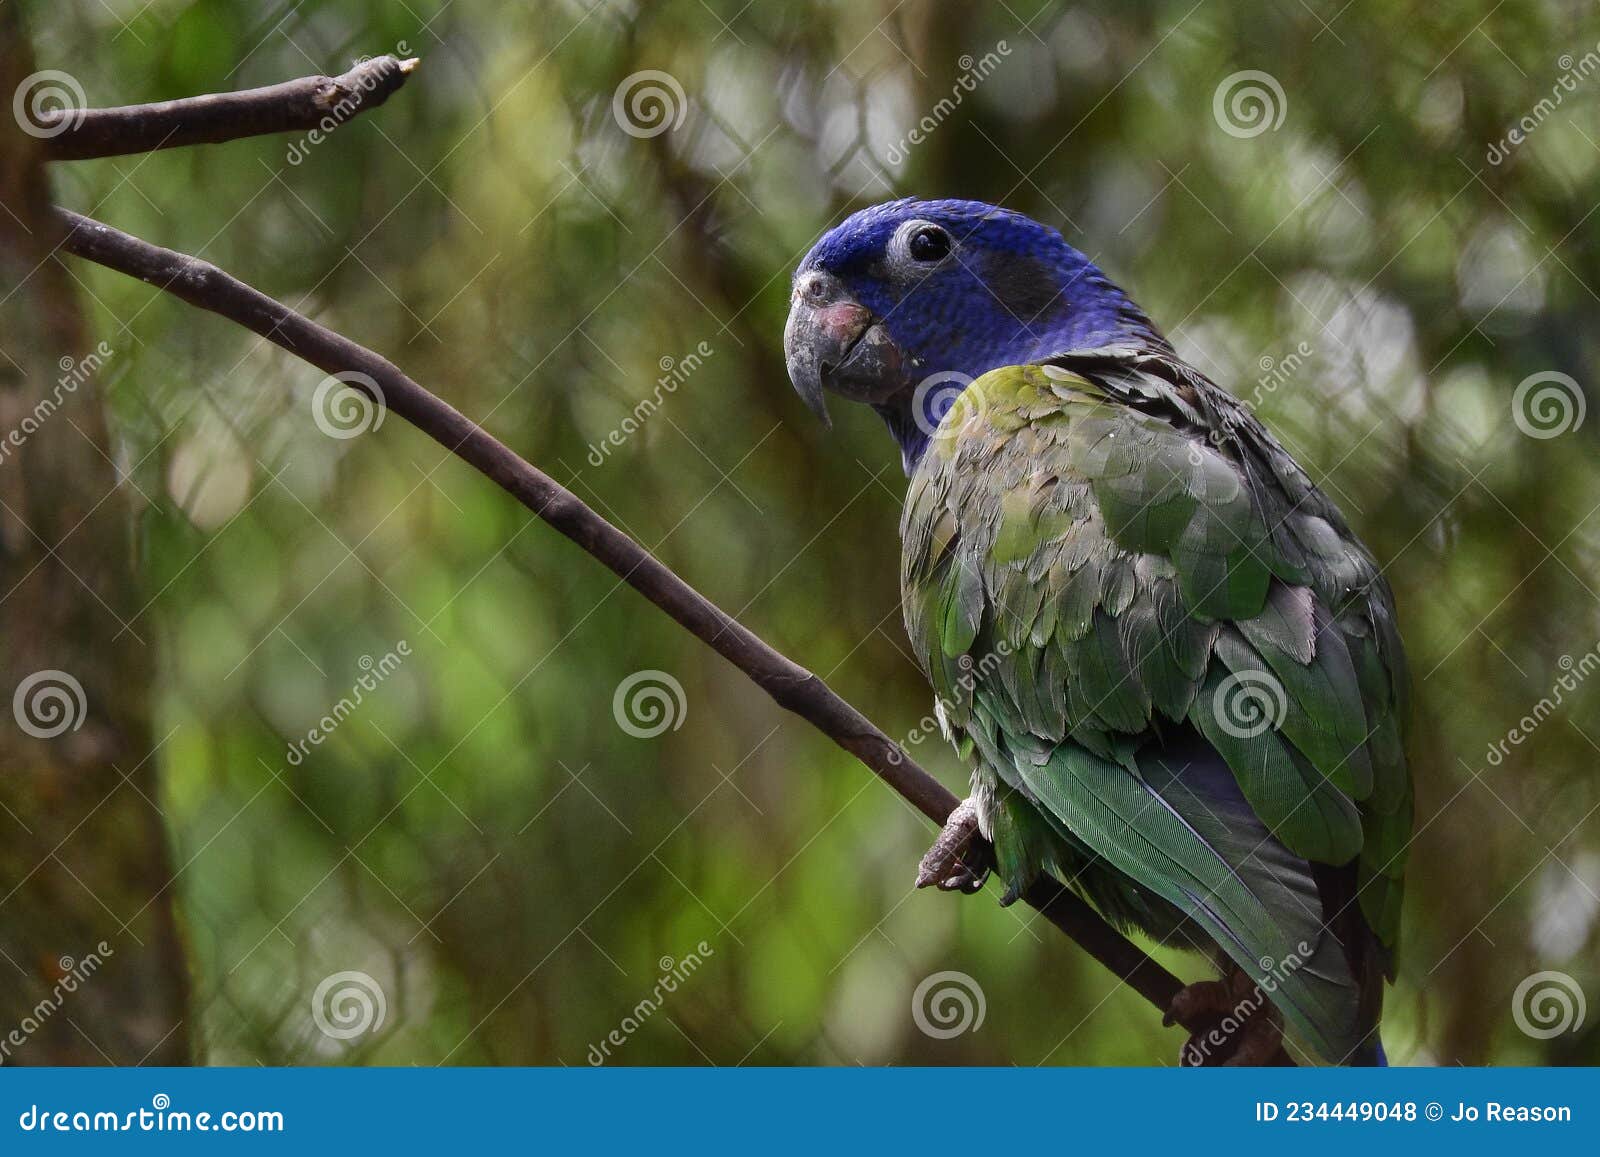 green parrot on a branch amazon region